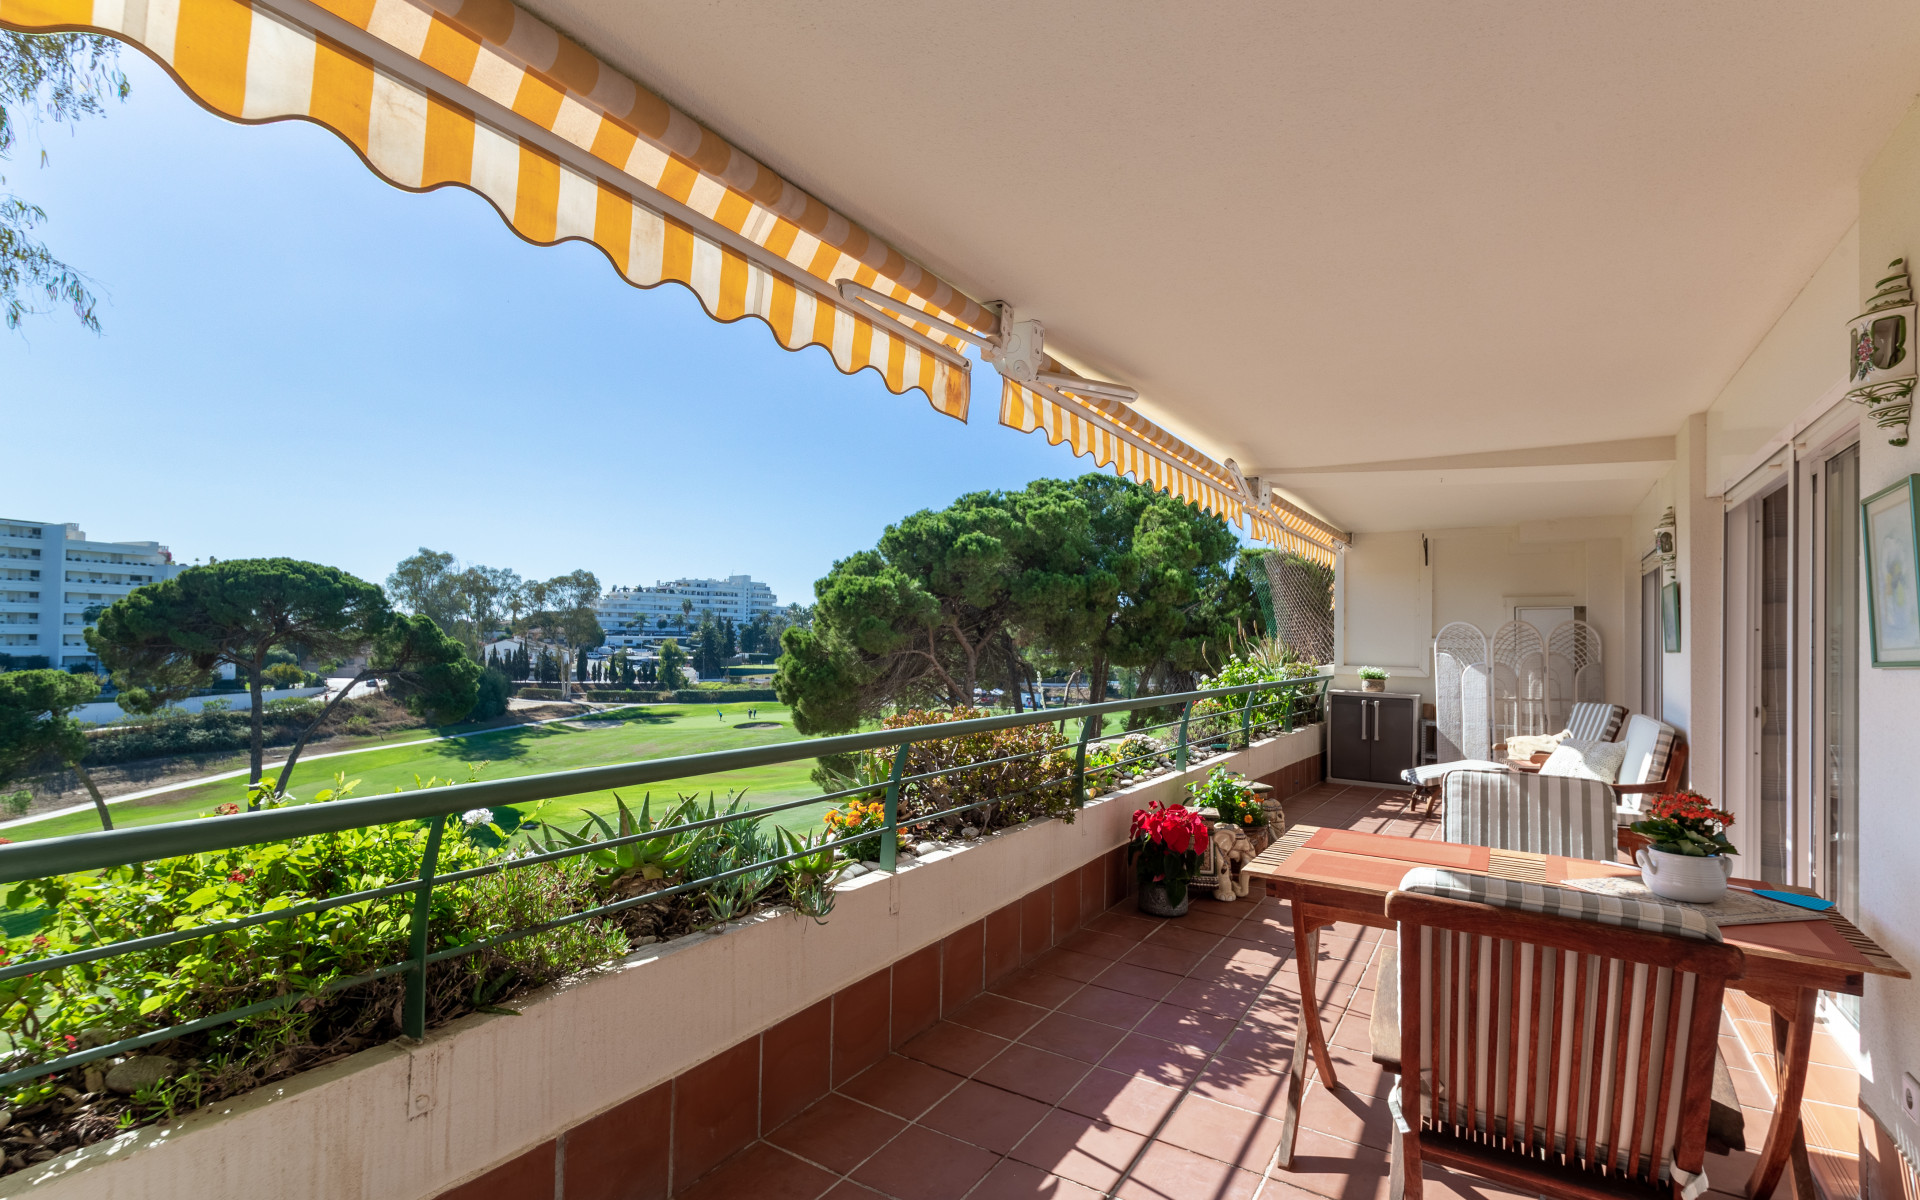 Wonderful 3-bedroom frontline golf apartment in Guadalmina Alta.